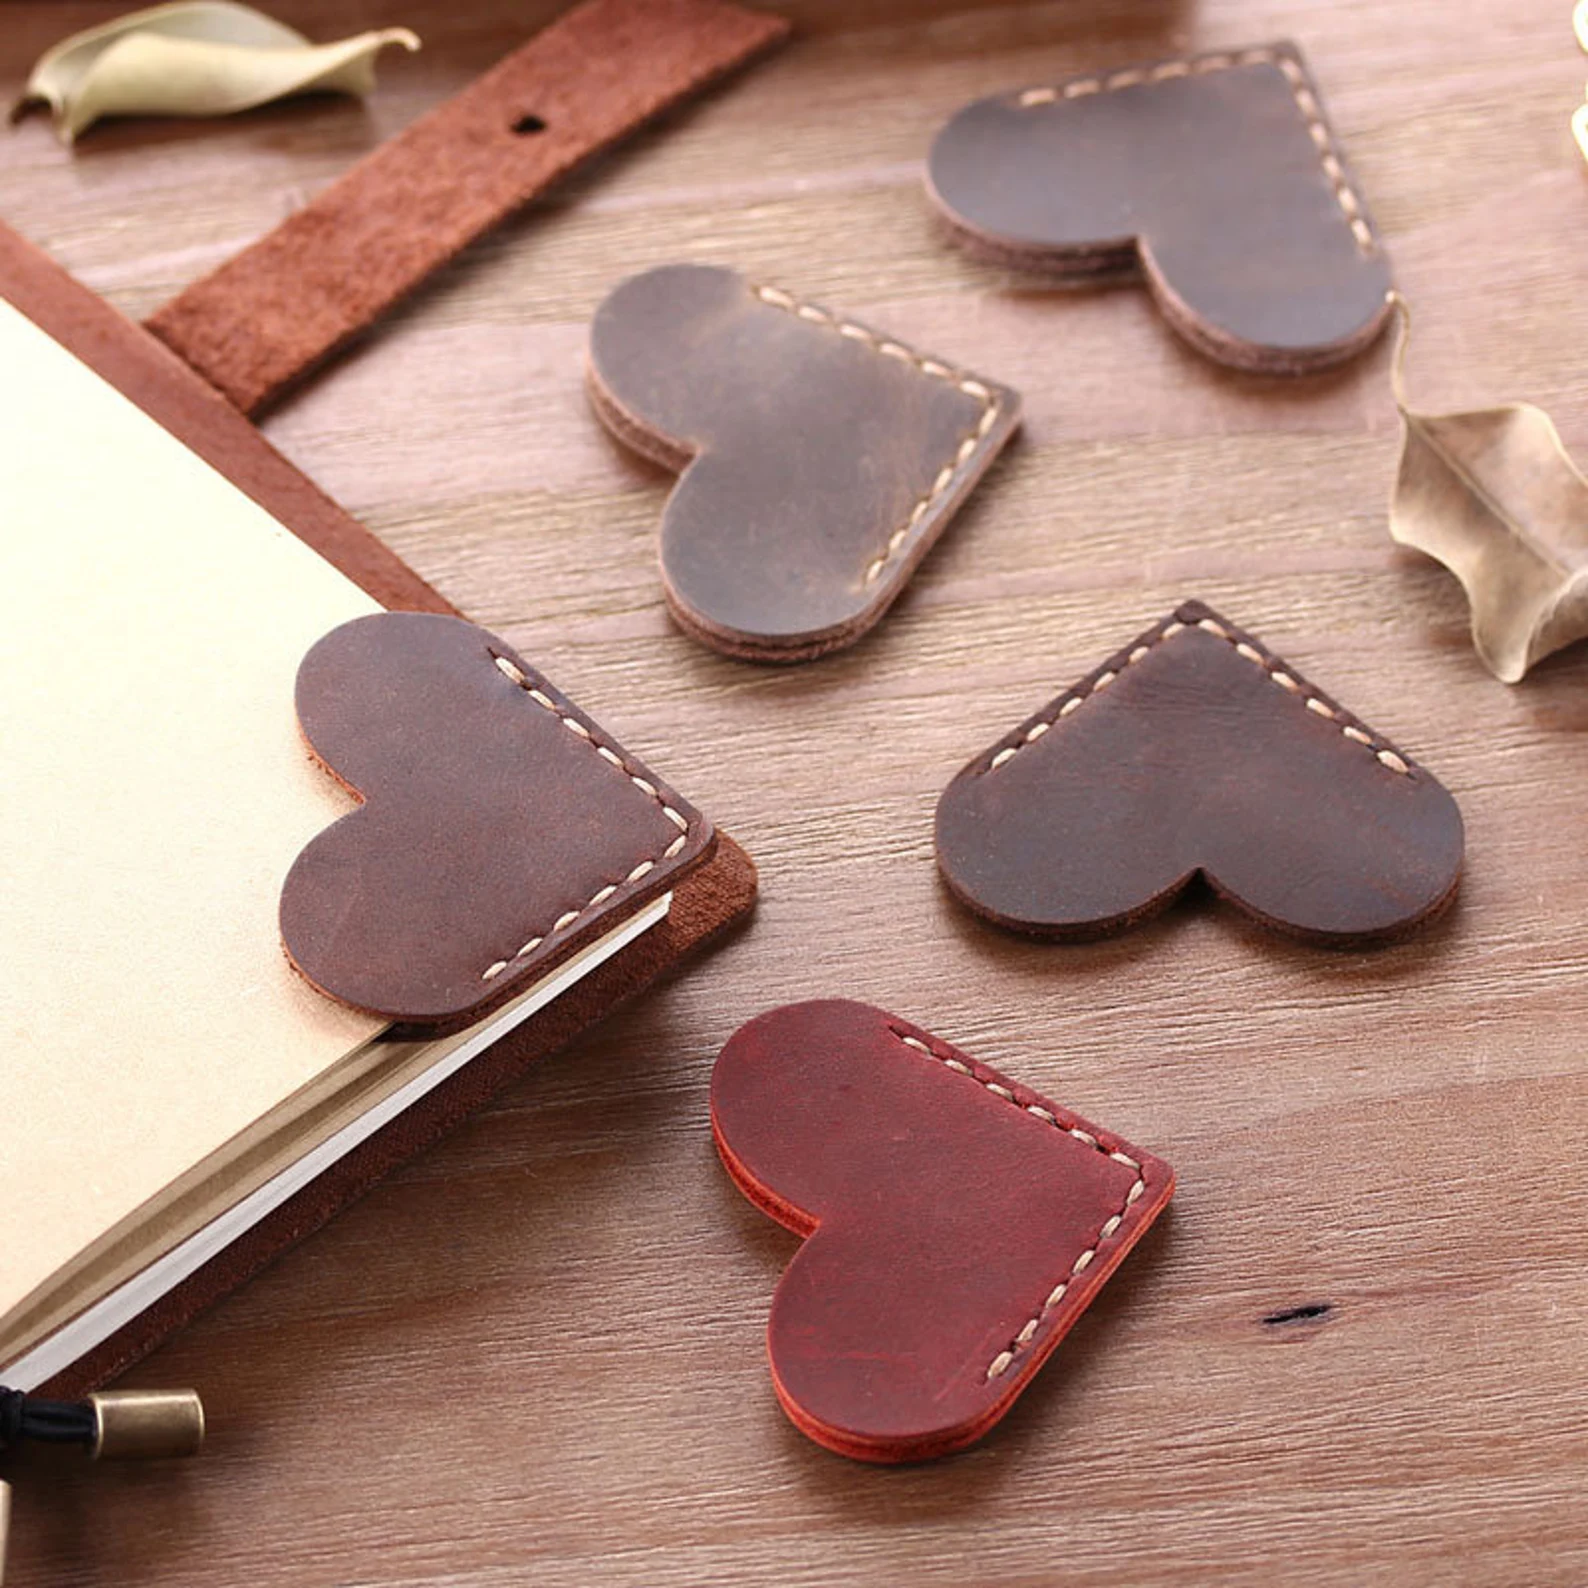 image of several heart shaped corner bookmarks